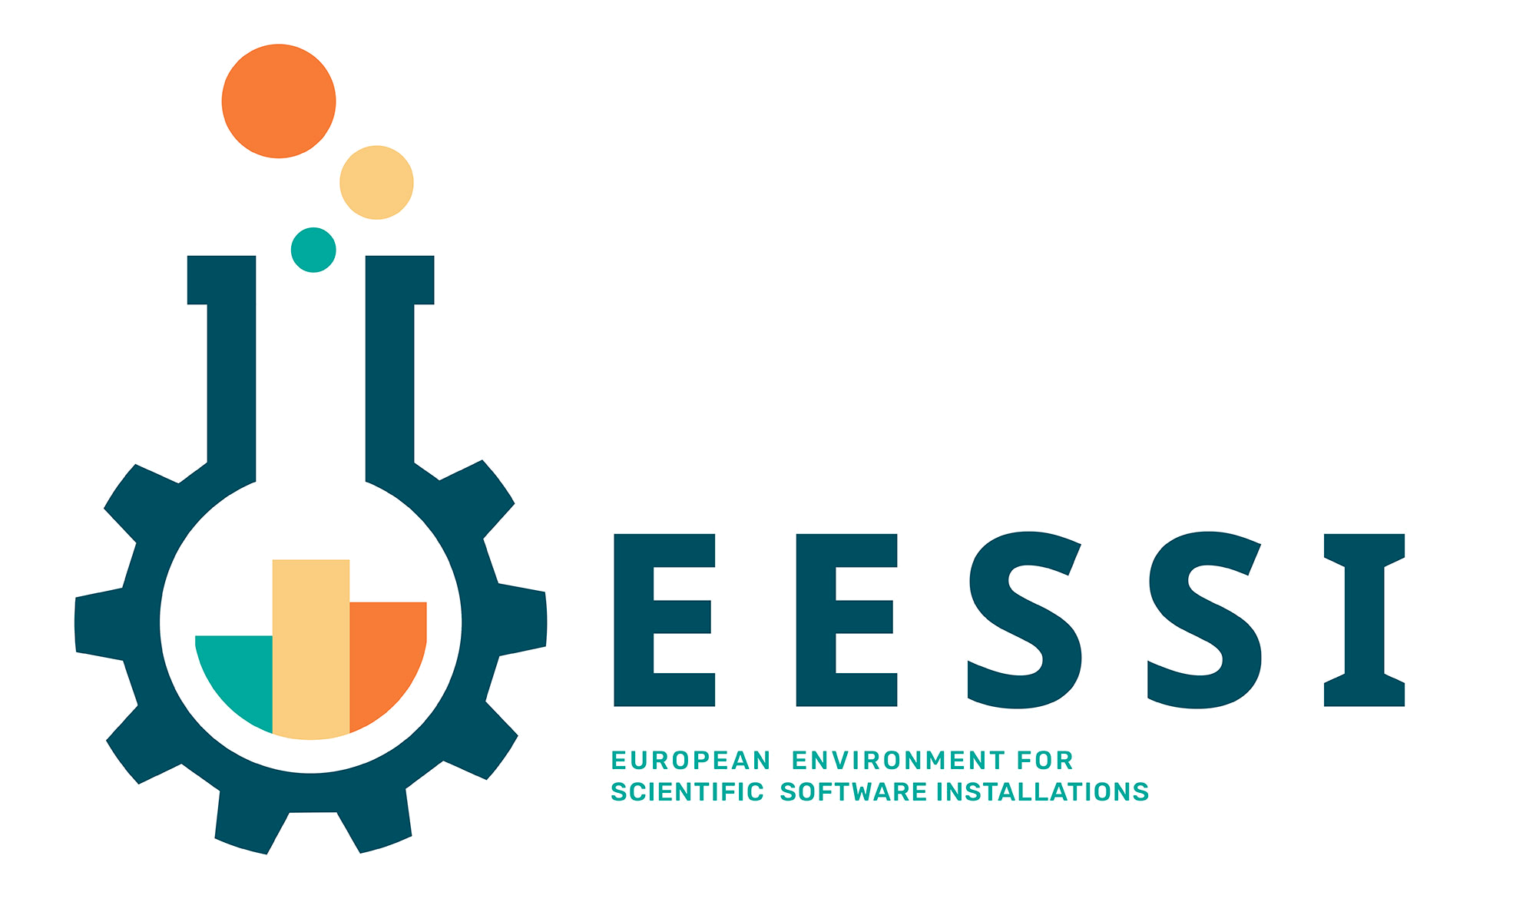 EESSI logo